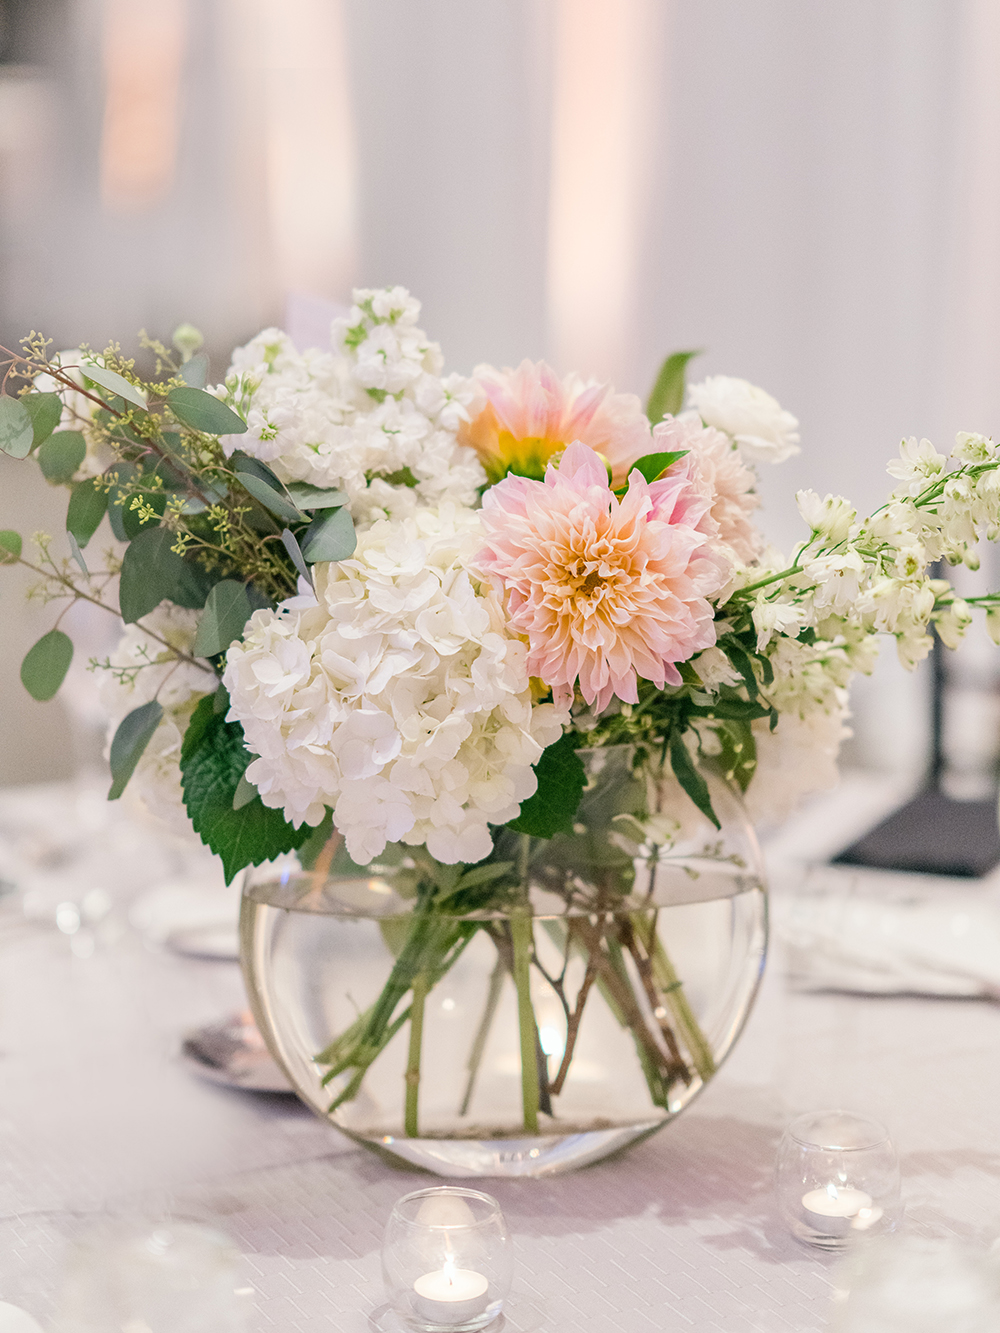 floral centerpiece - wedding reception decor 